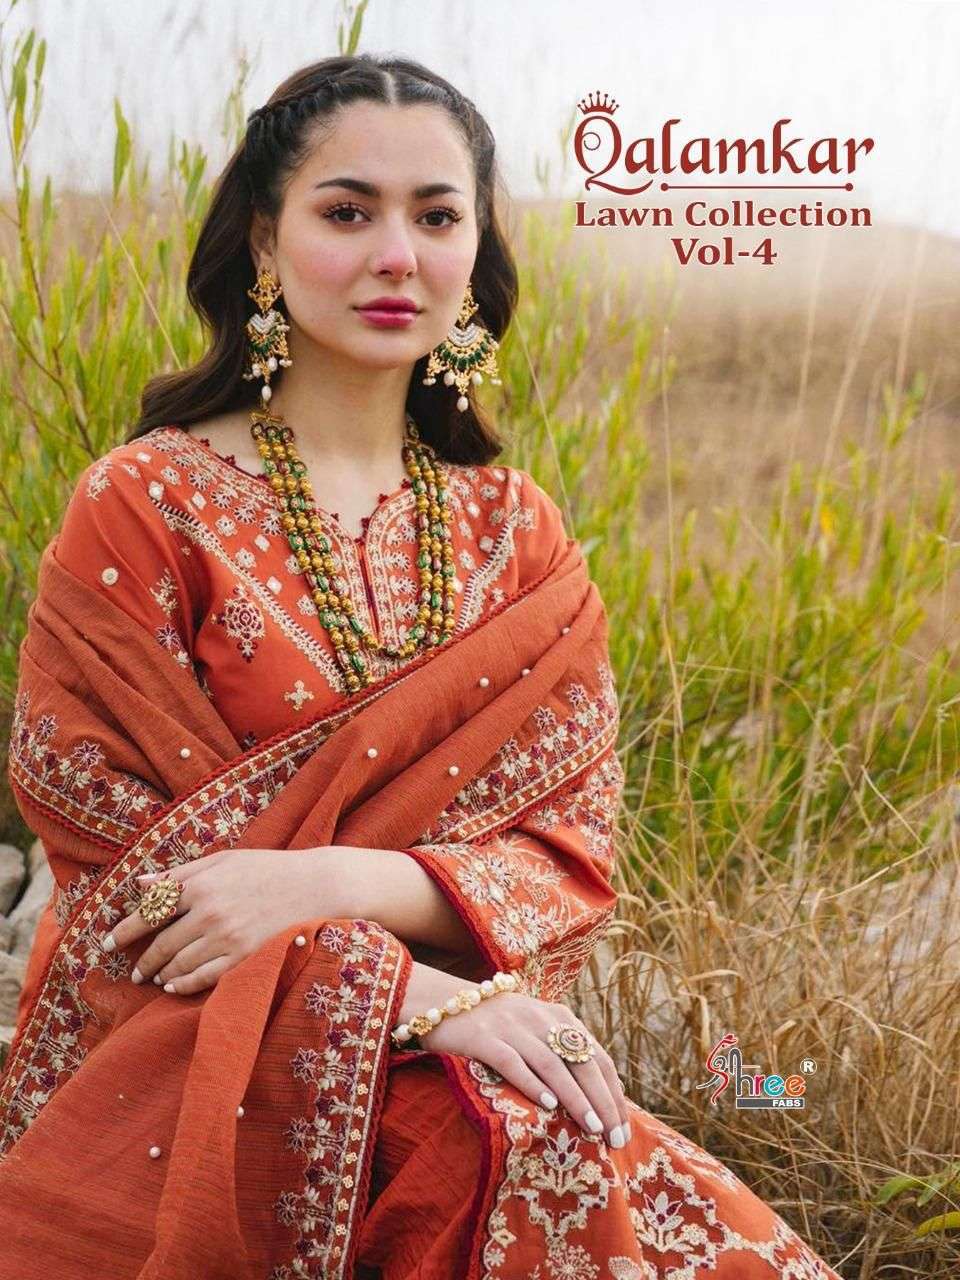 shree fabs qalamkar lawn collection vol 04 series 2246-2251 pure lawn cotton suit